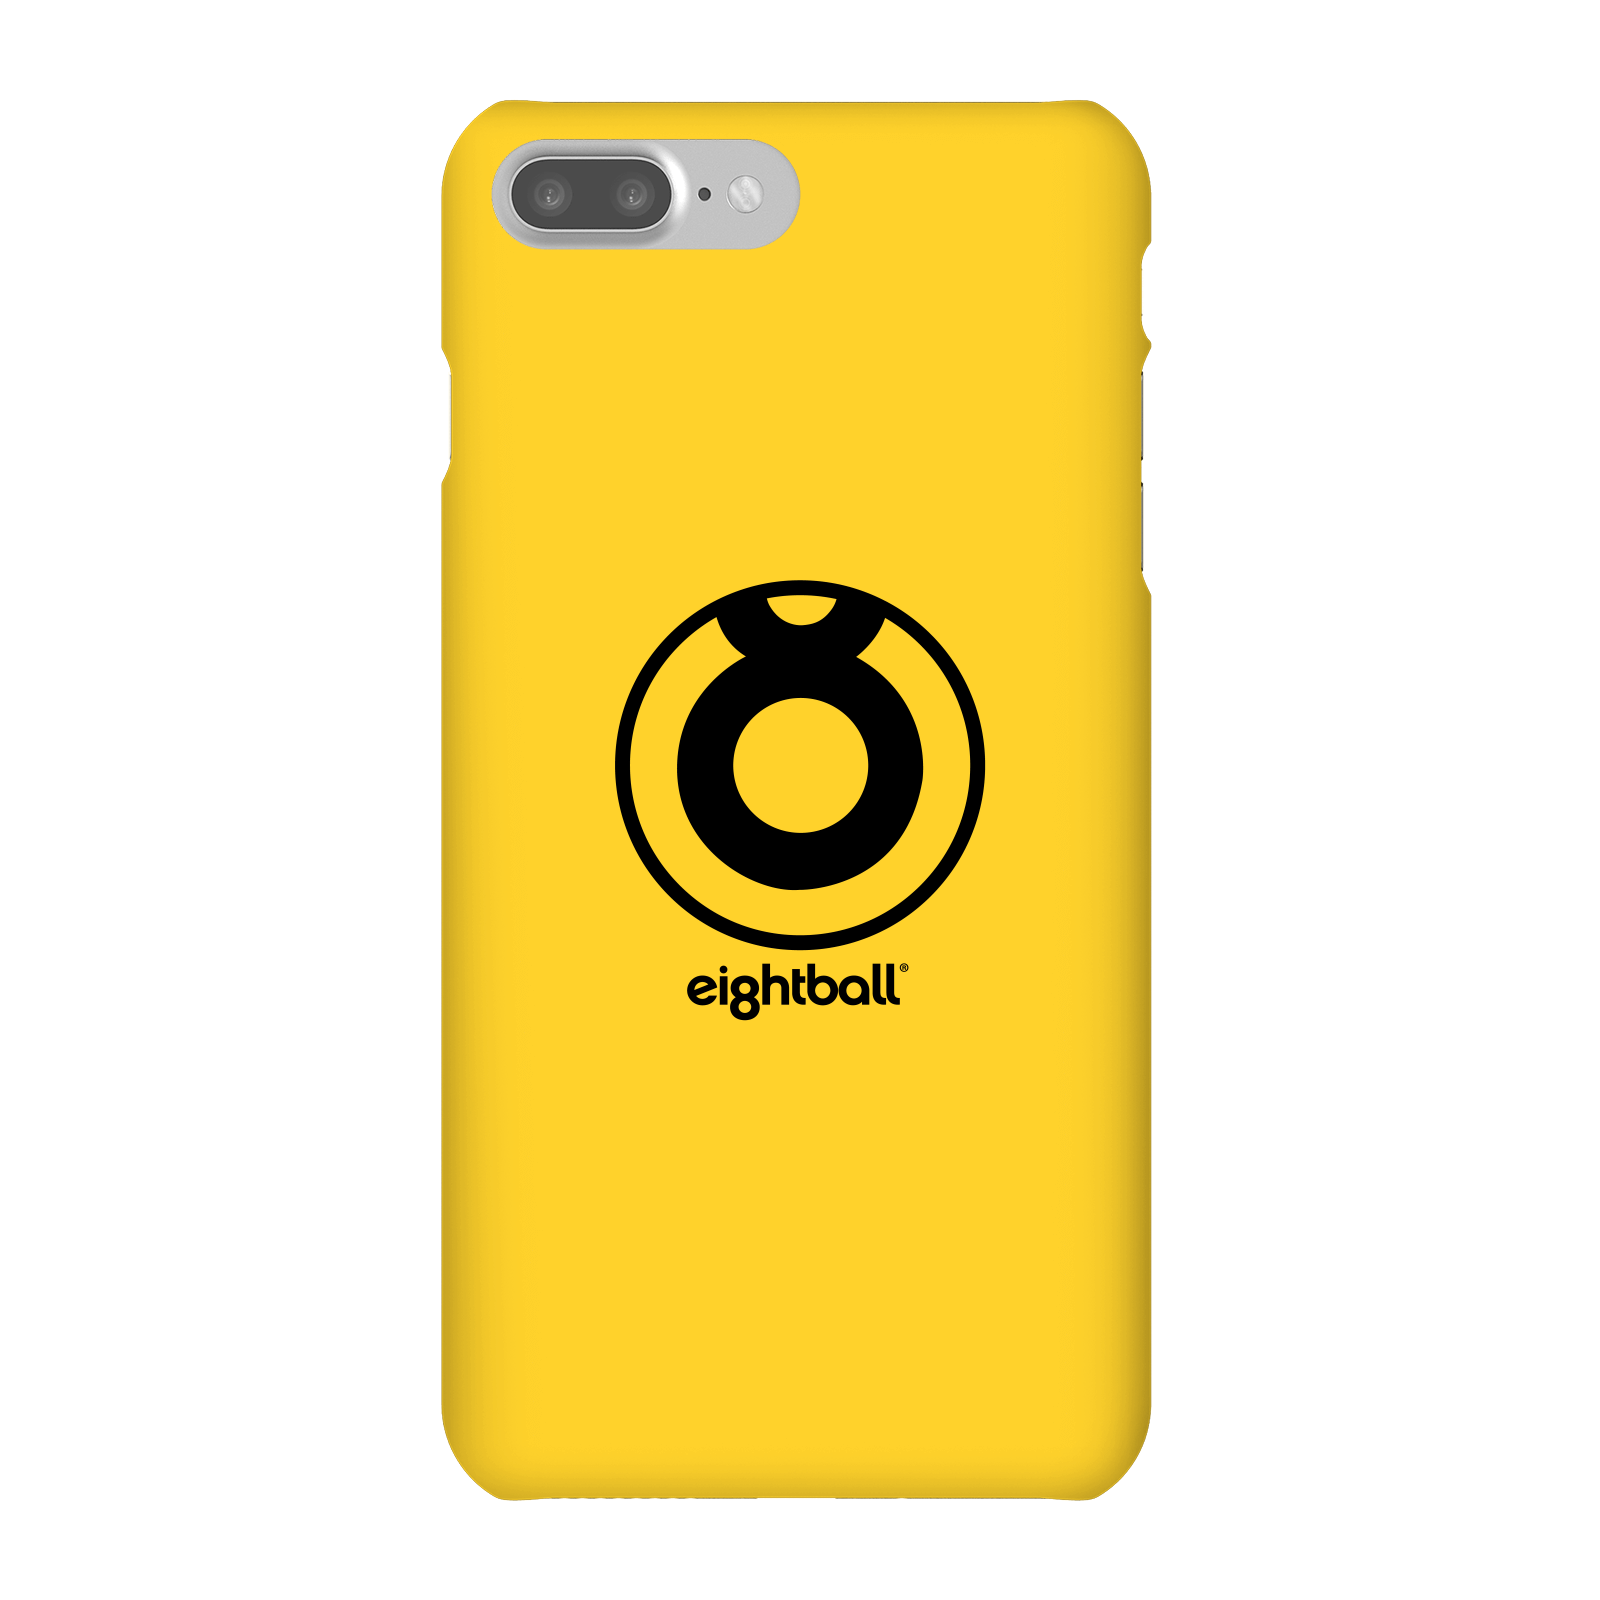 Funda Móvil Ei8htball Large Circle Logo para iPhone y Android - iPhone 7 Plus - Carcasa rígida - Brillante